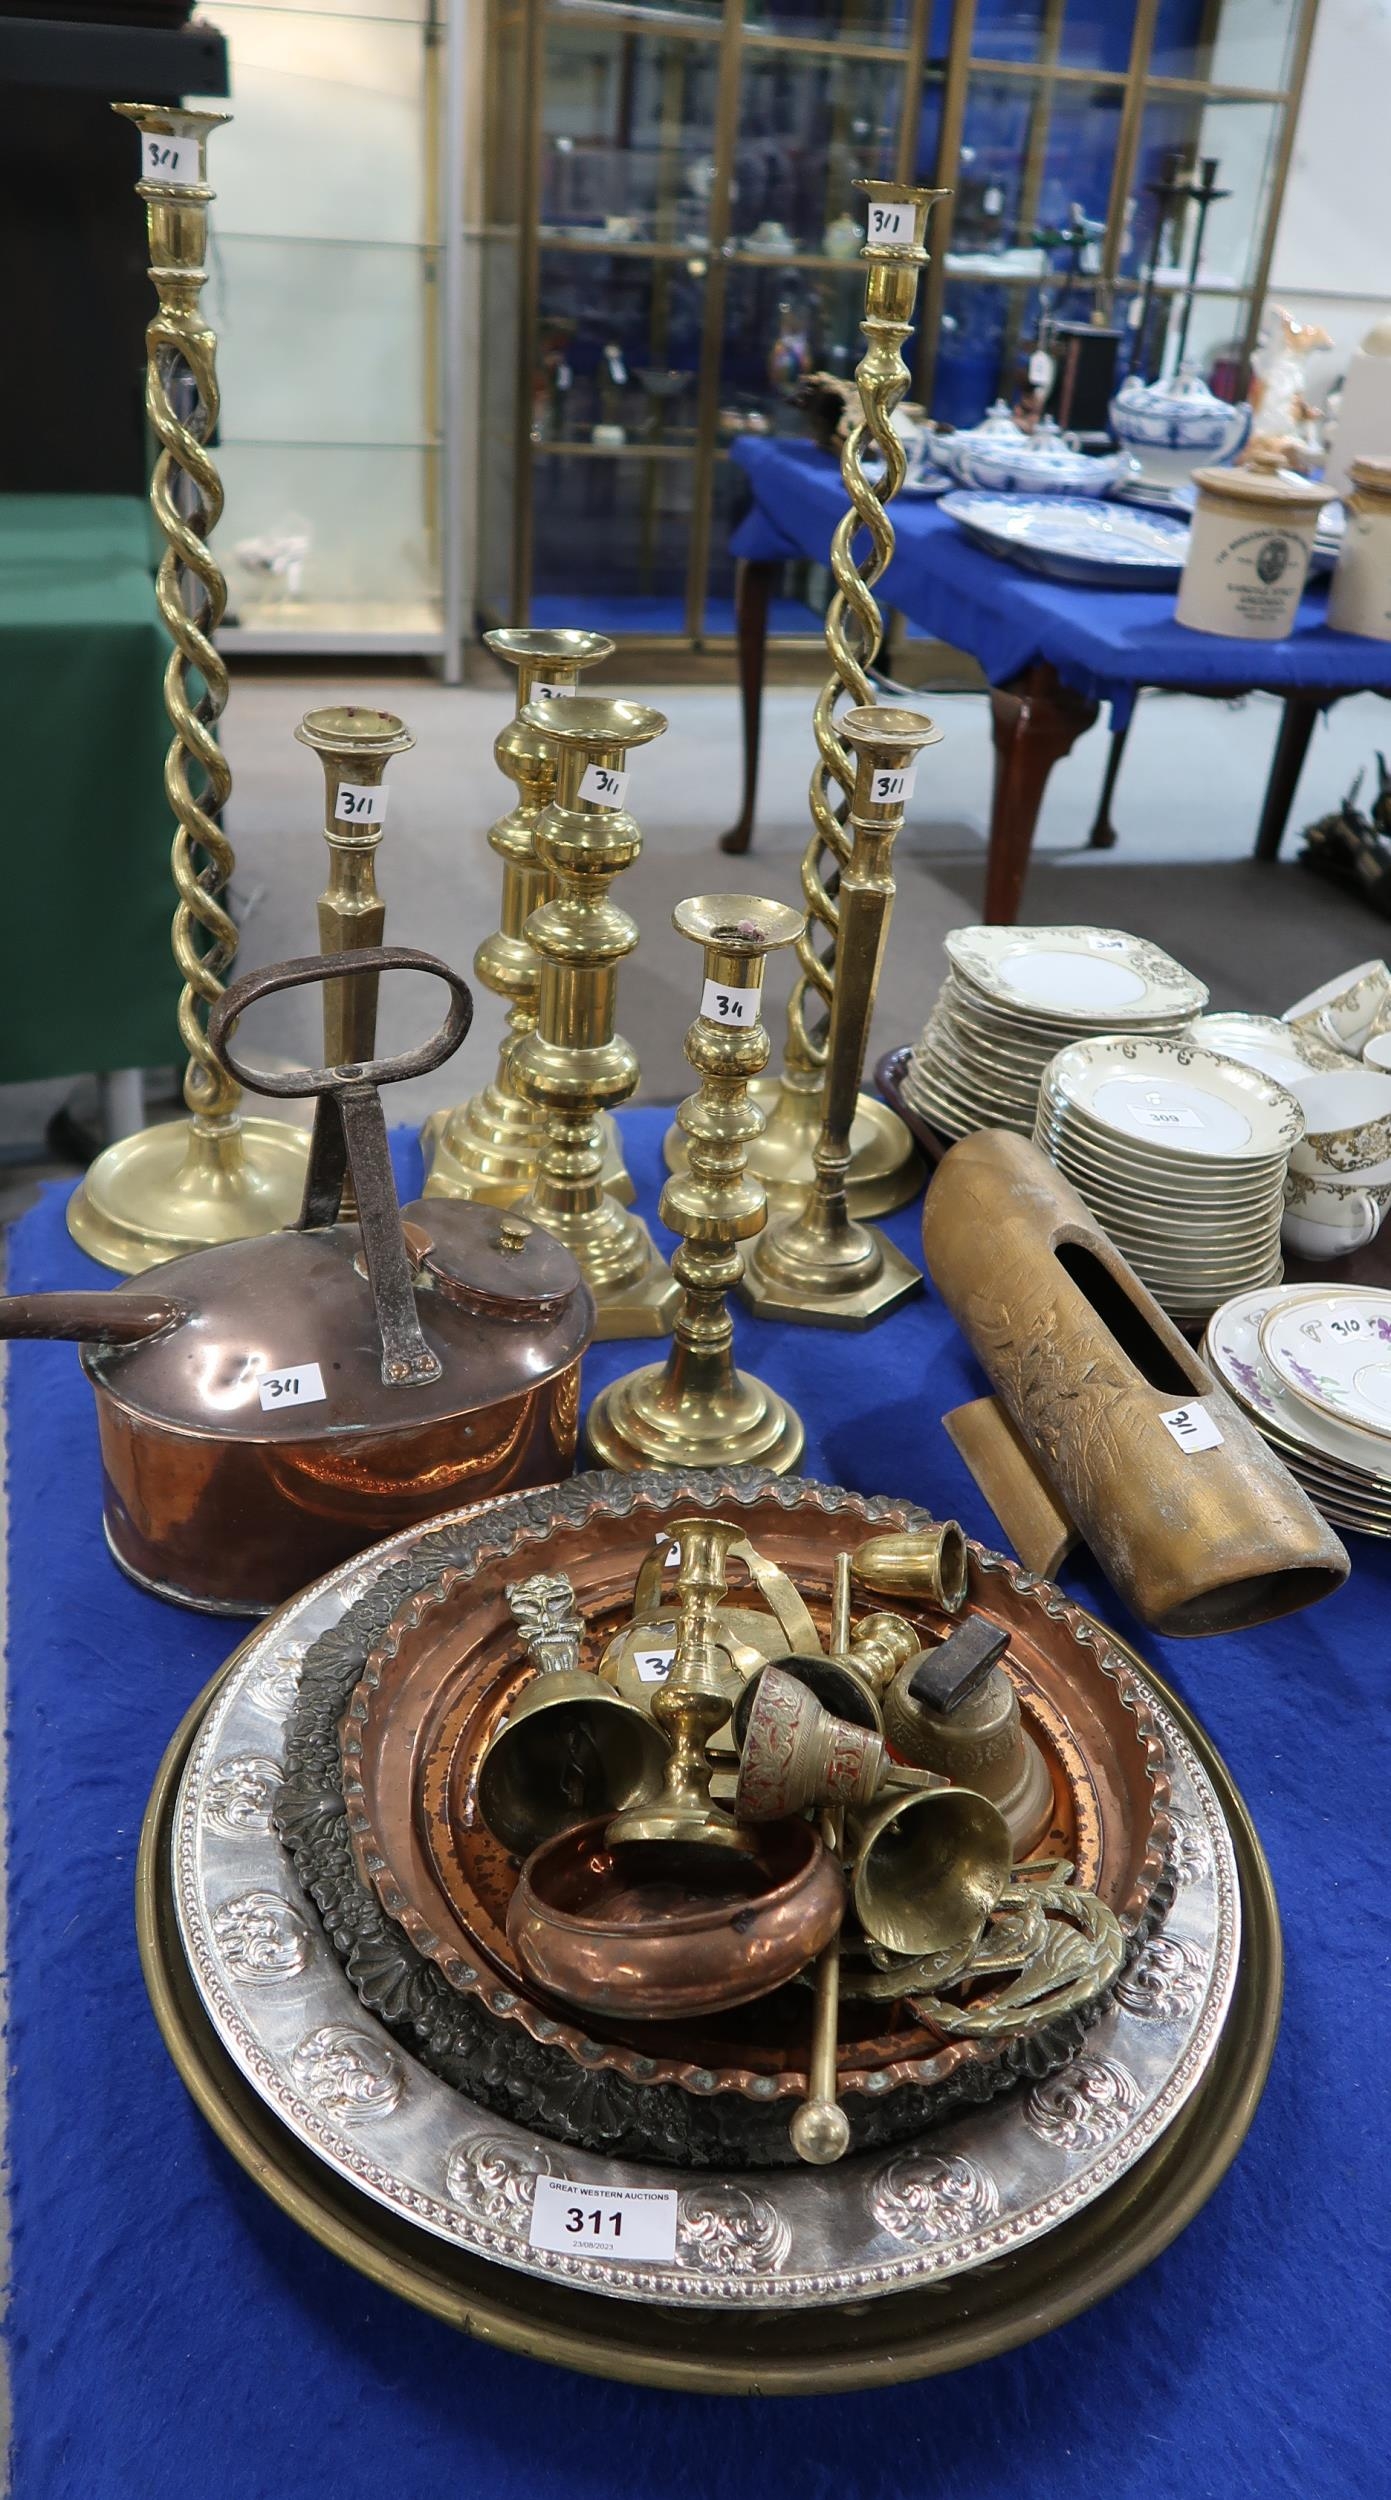 A pair of tall brass barley twist candlesticks, other candlesticks, copper  and brass etc